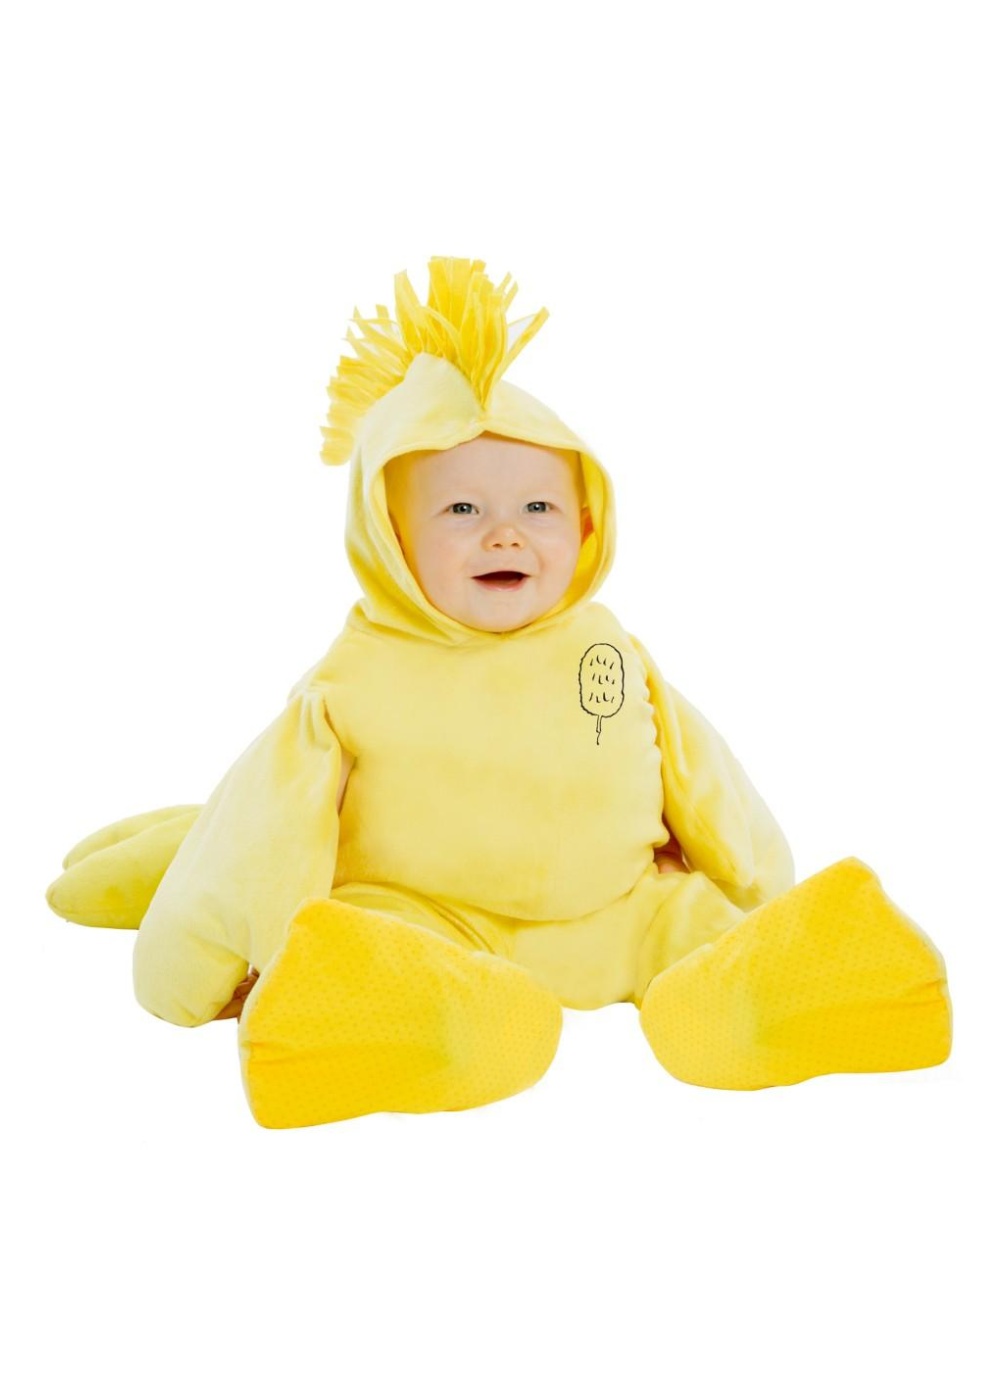 tweety bird baby costume